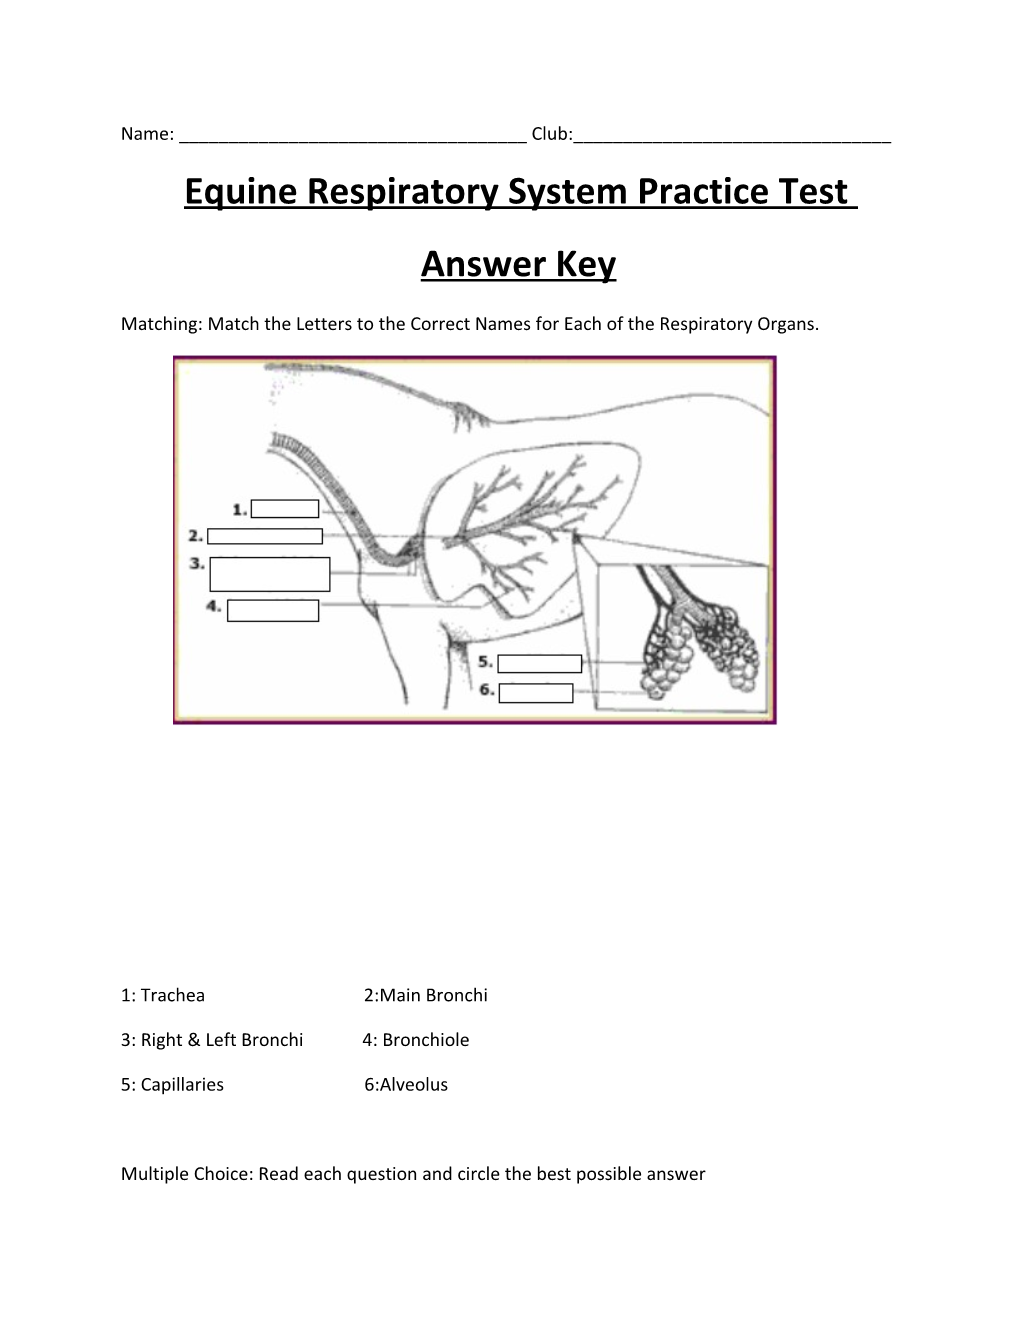 Equine Respiratory System Practice Test